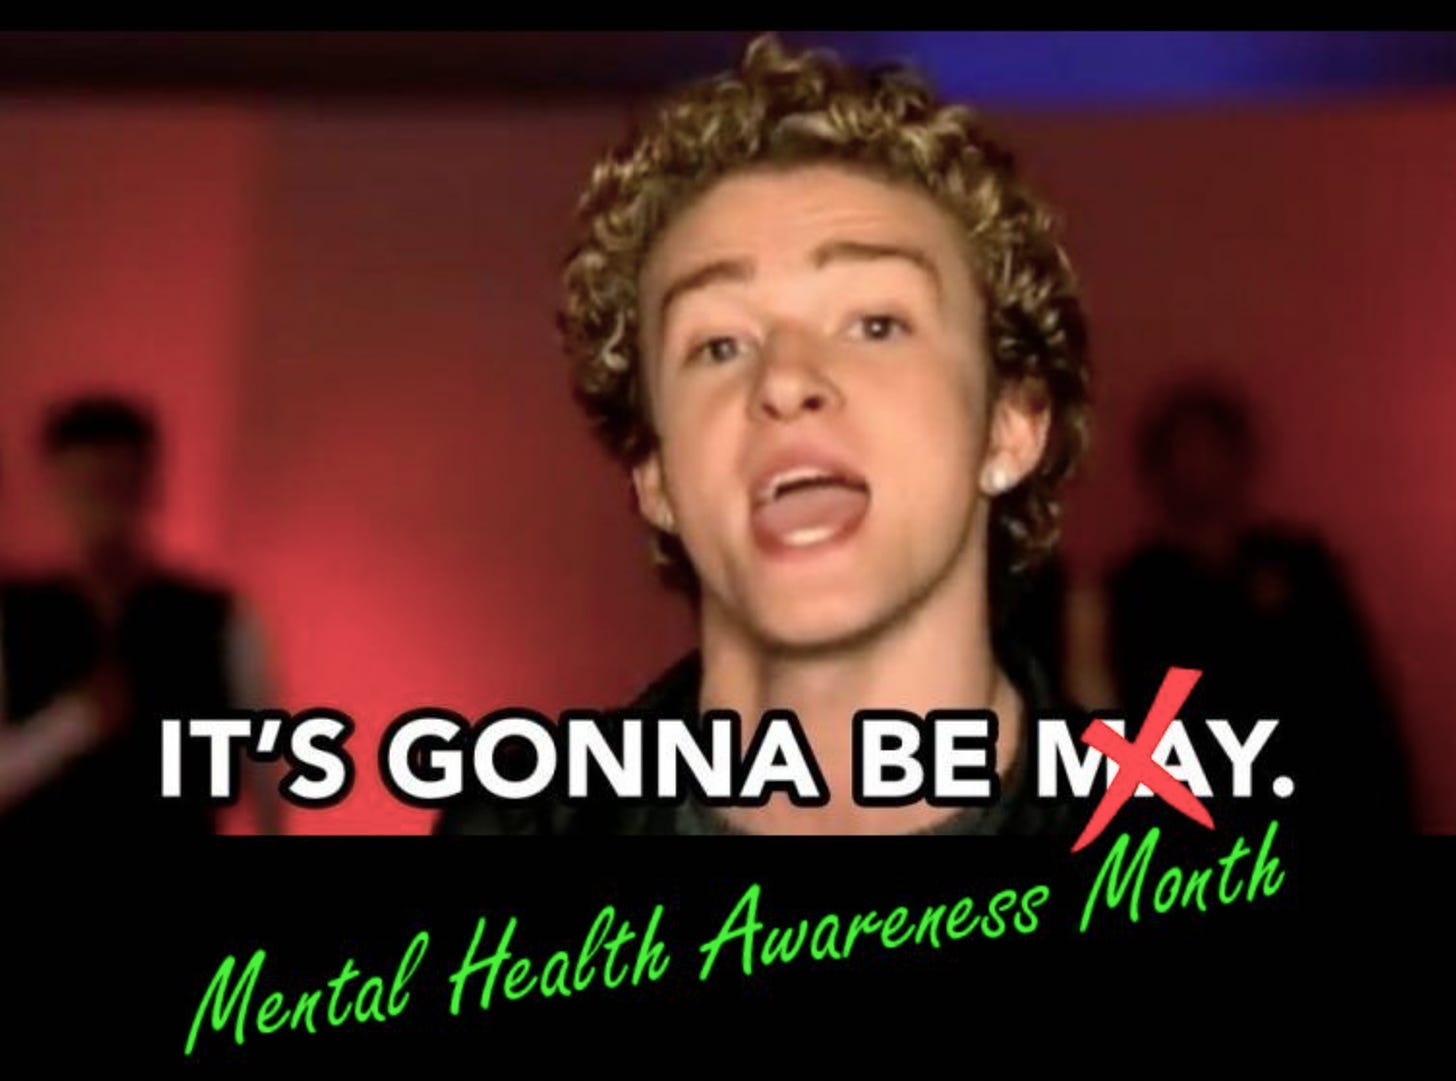 Meme of Justin Timberlake saying, "It's gonna be Mental Health Awareness Month."